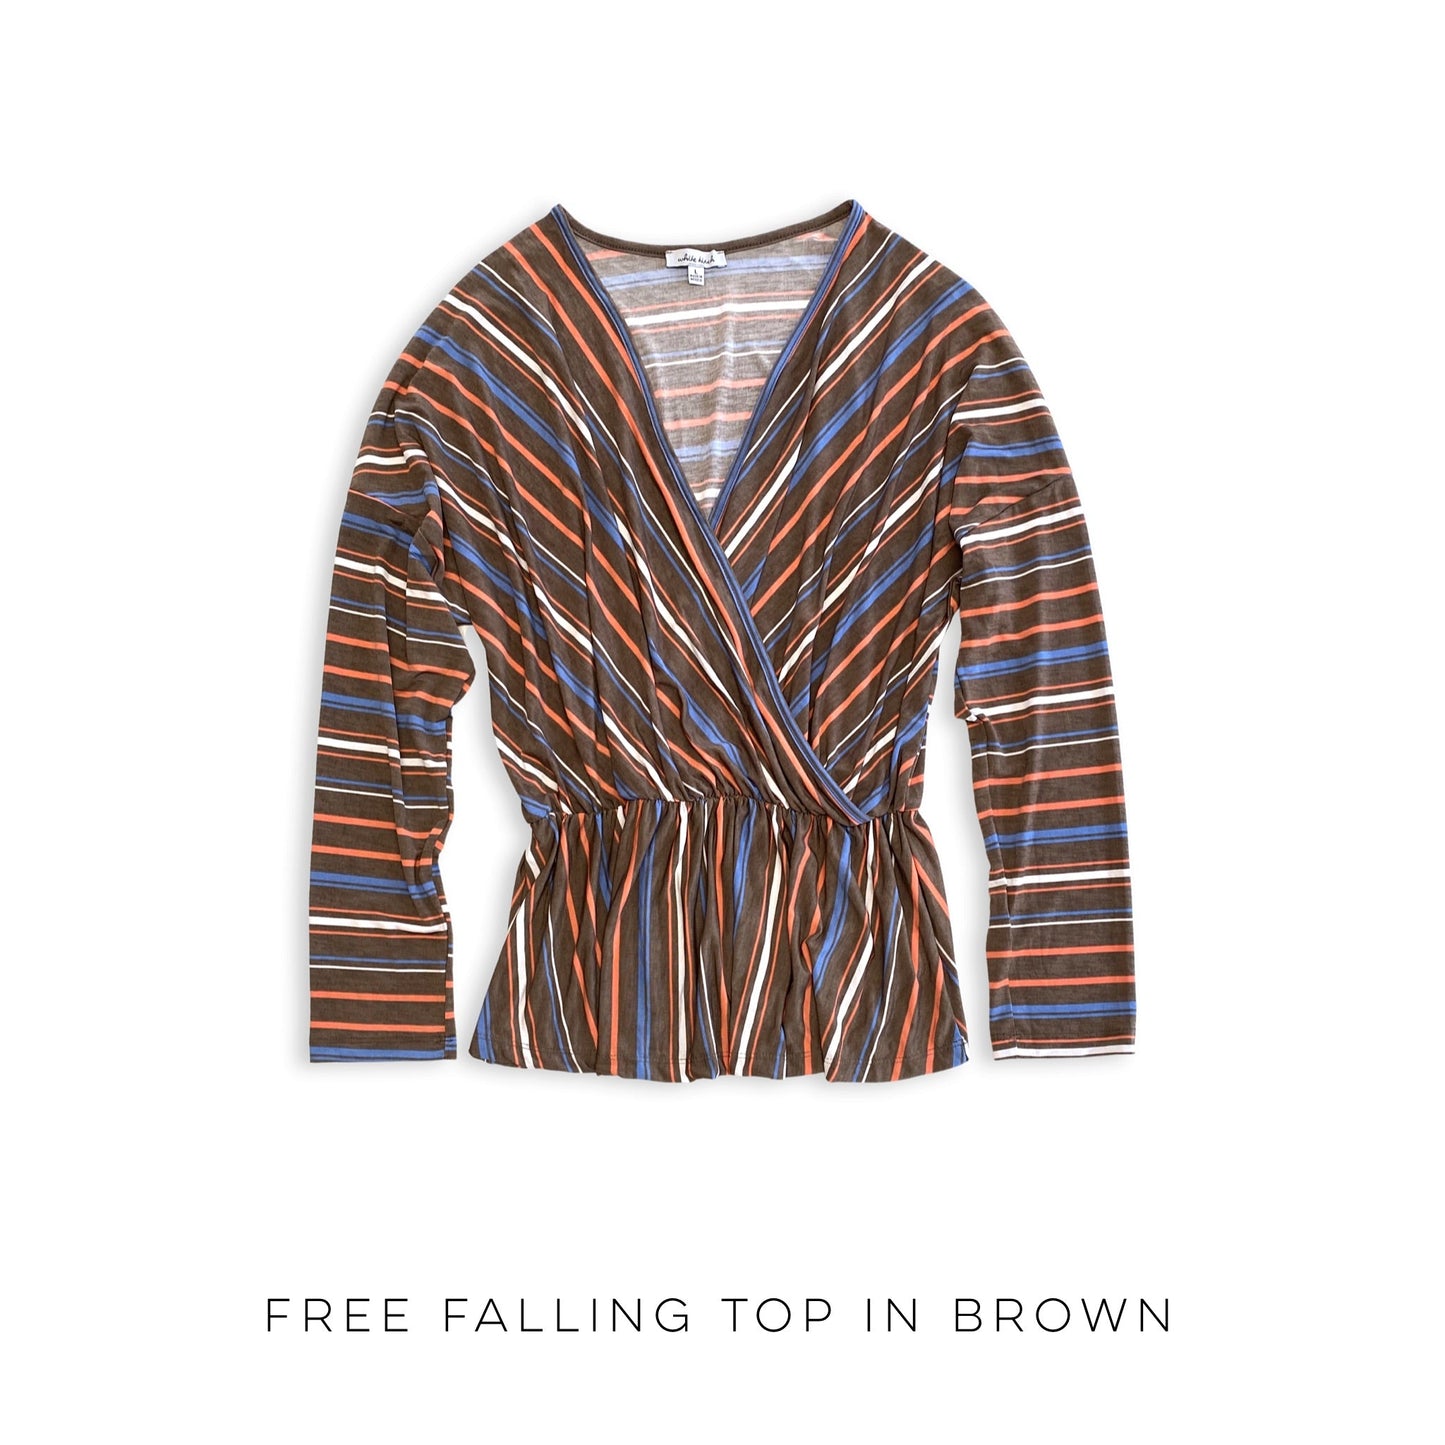 Free Falling Top in Brown